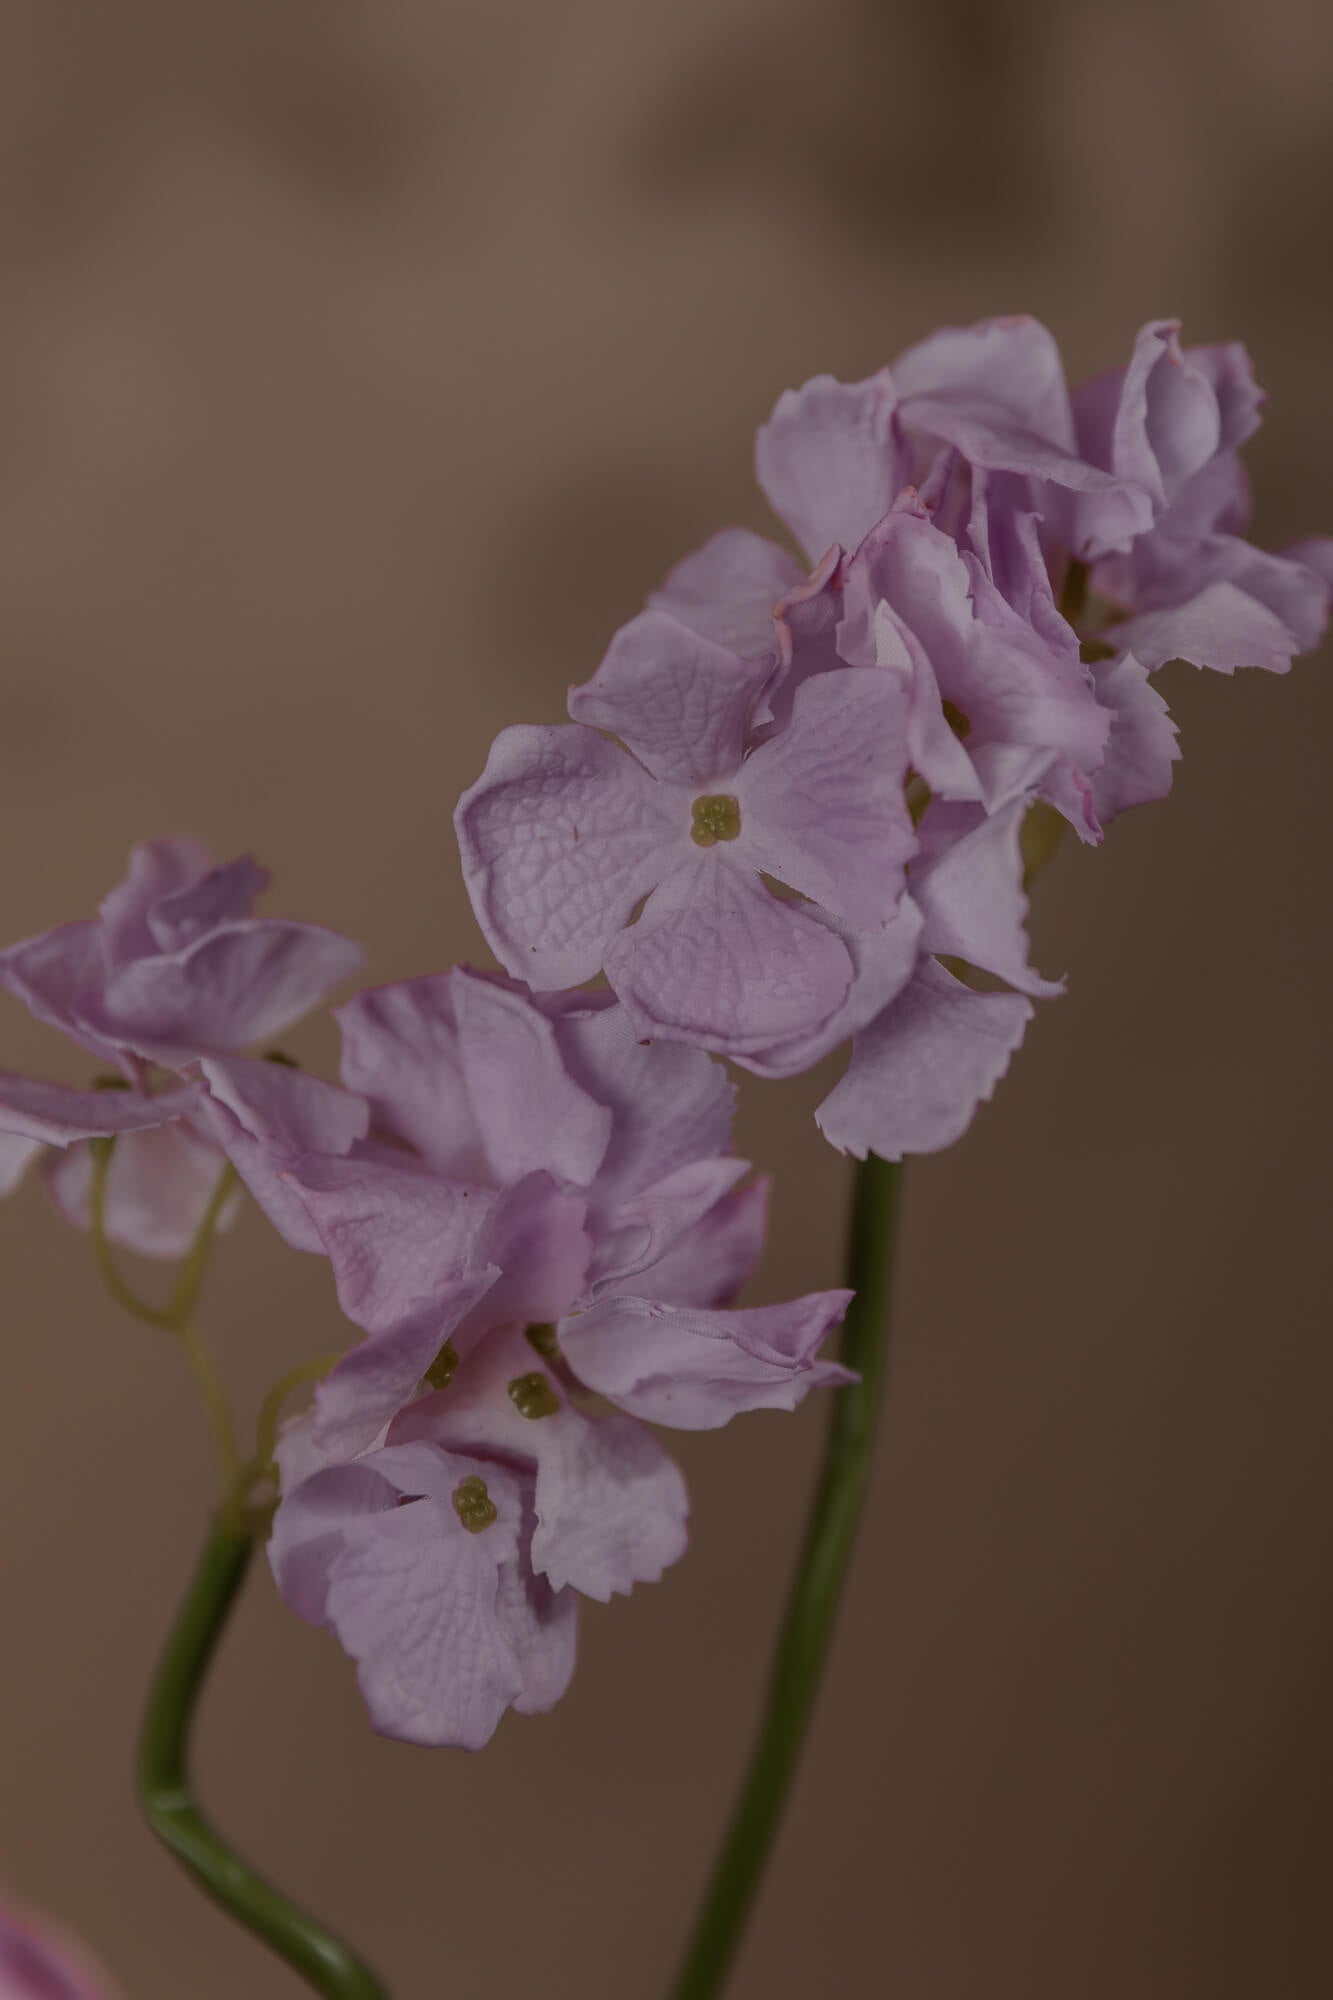 Dried purple orchids from Hidden Botanics.